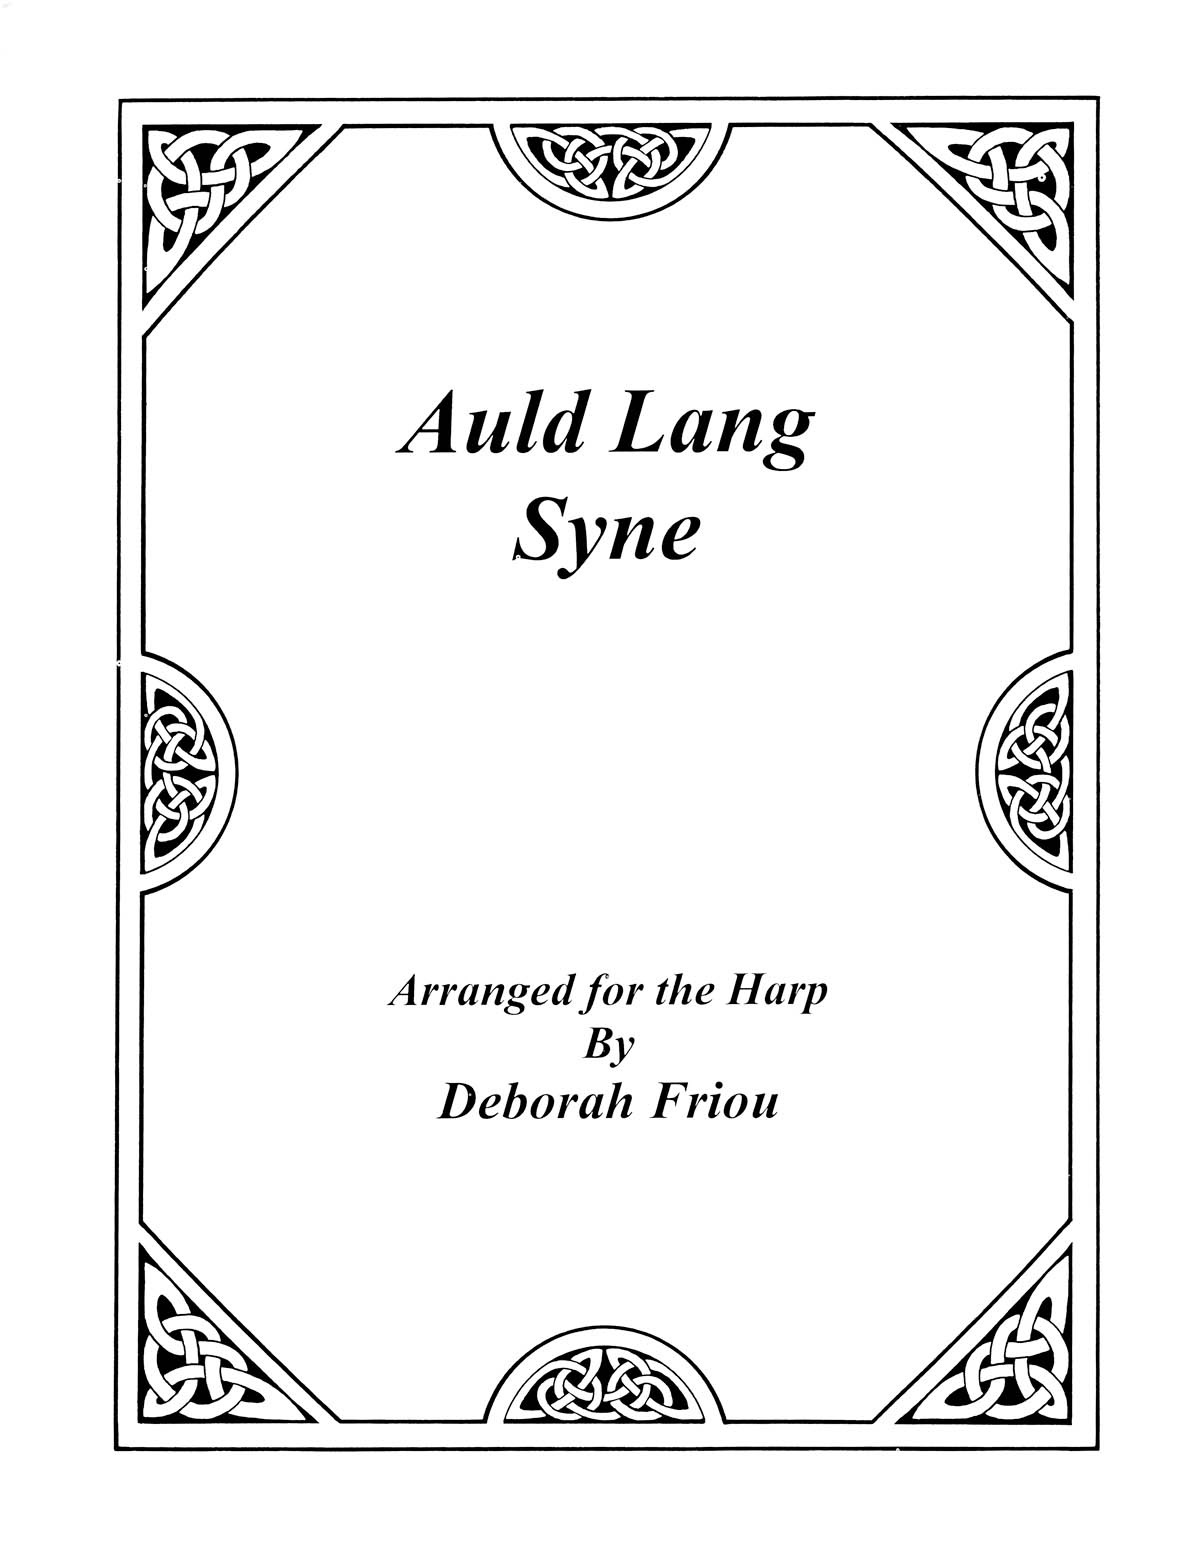 Auld Lang Syne - Arranged for the Harp by Deborah Friou - noty pro harfu